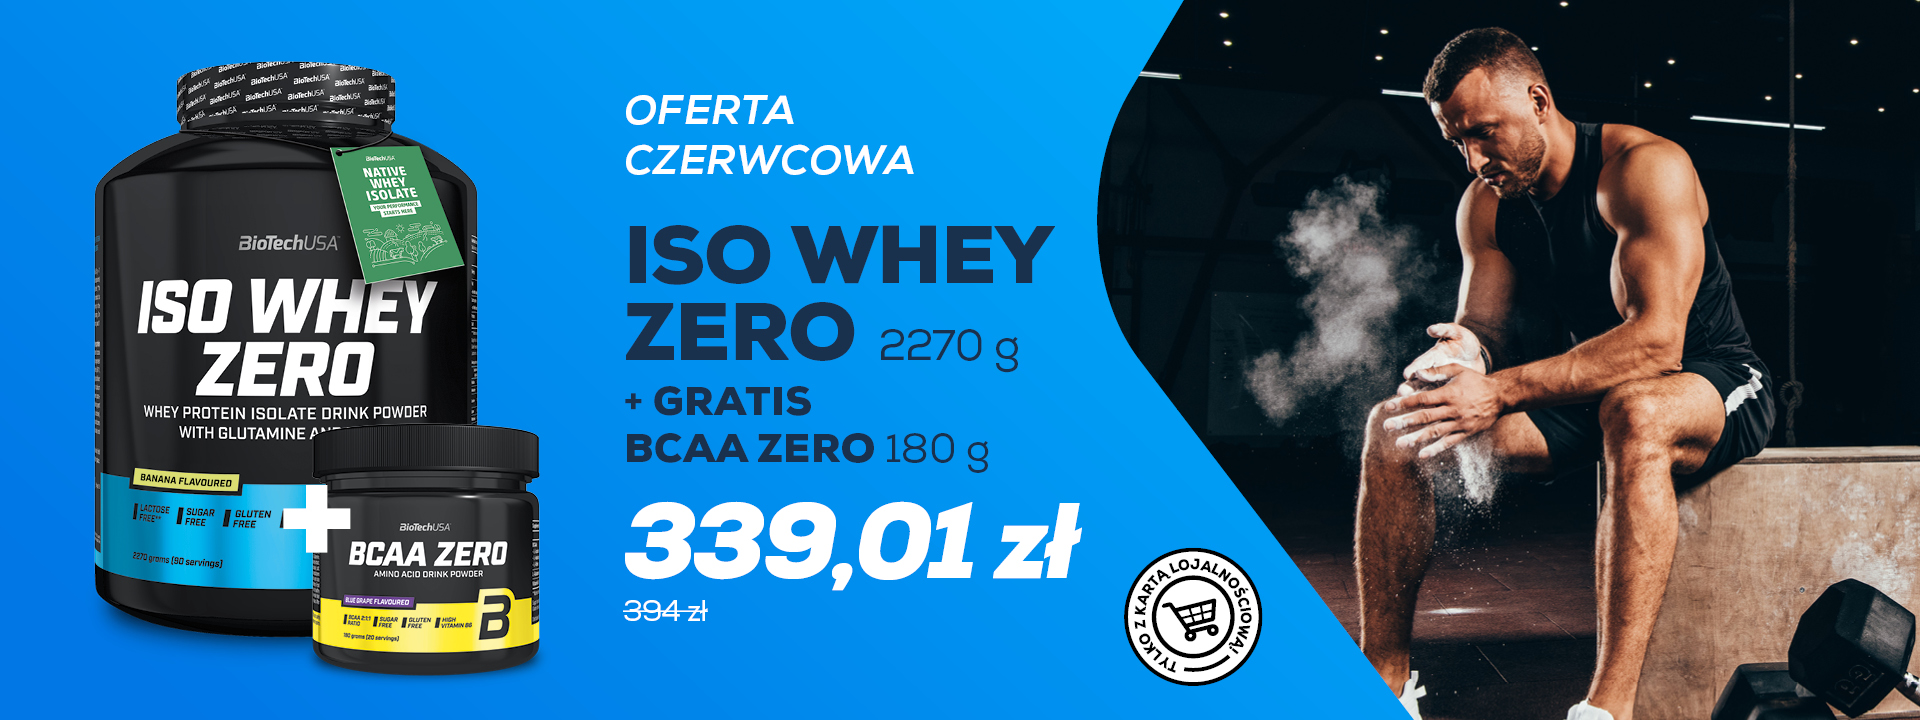 Iso Whey Zero 2270 g + BCAA 180g Gratis